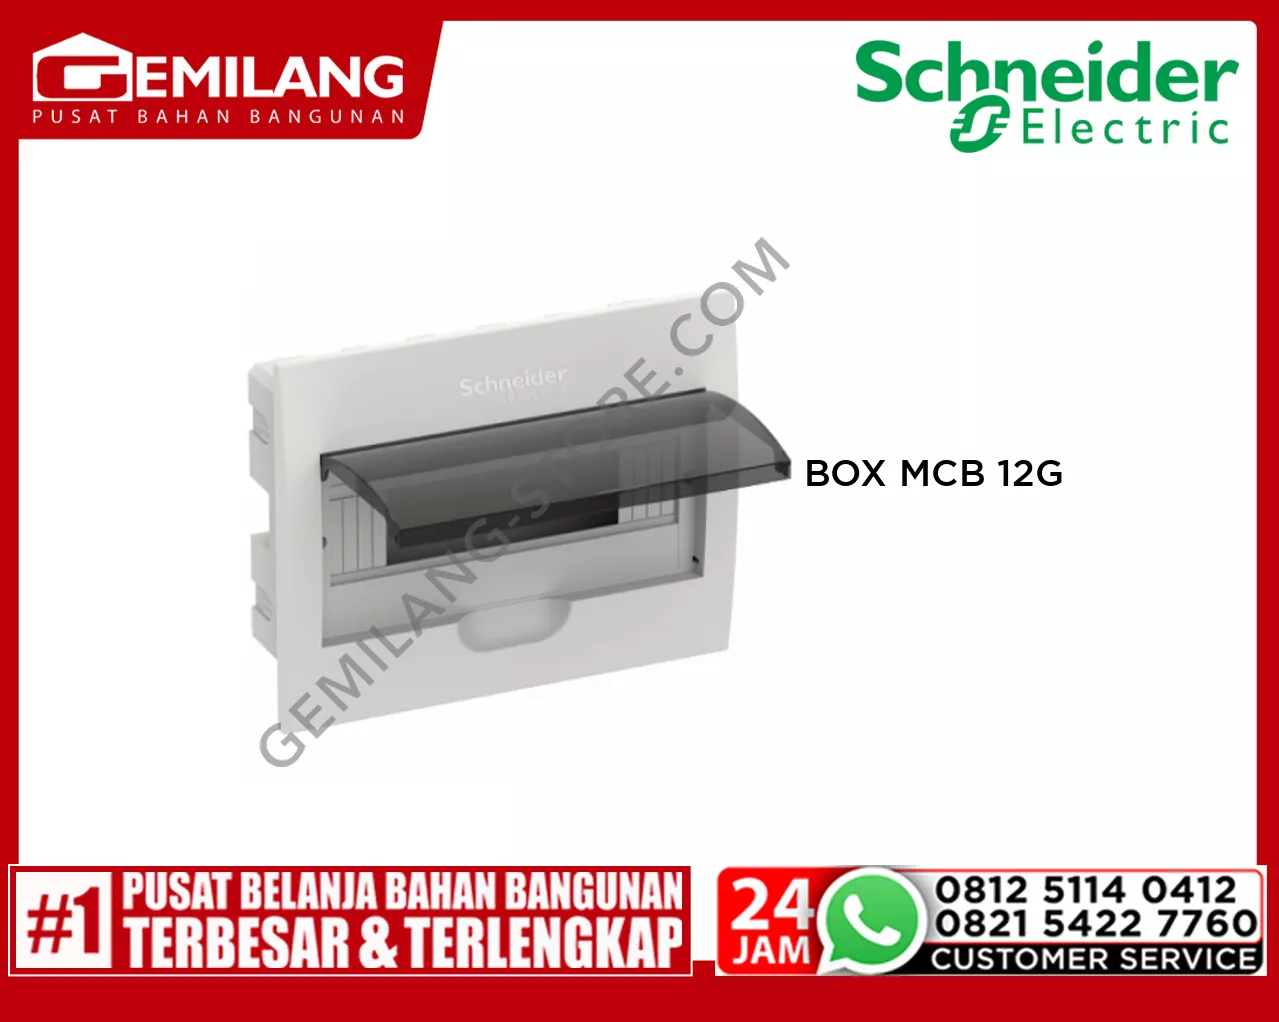 SCHNEIDER BOX MCB 12G